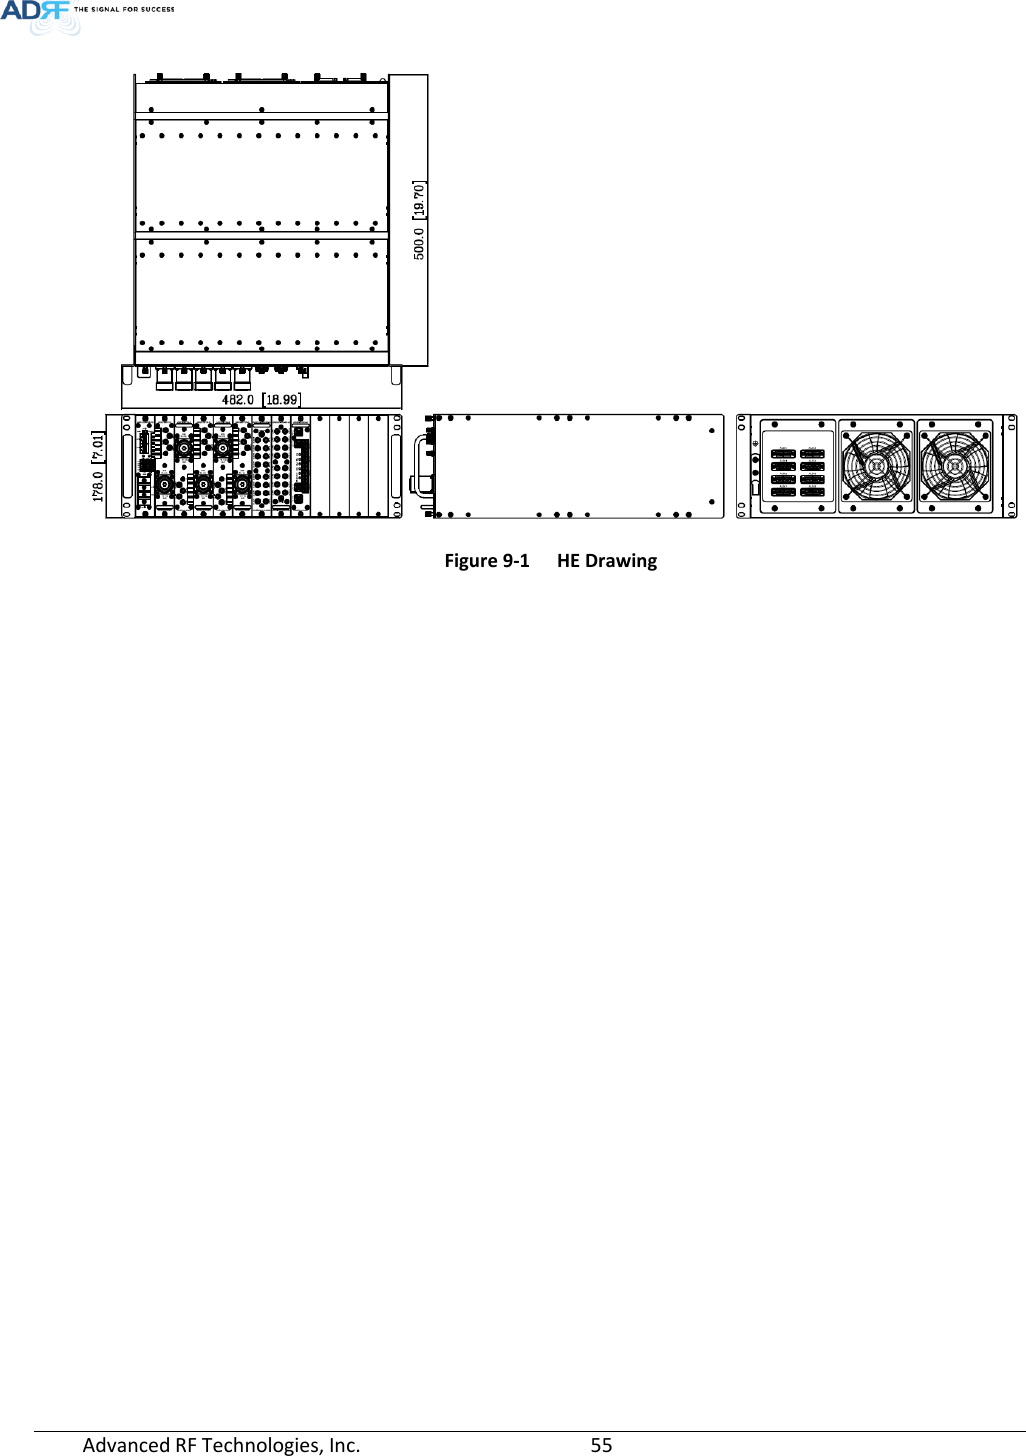 Page 55 of ADRF KOREA ADXV DAS(Distributed Antenna System) User Manual ADXV DAS